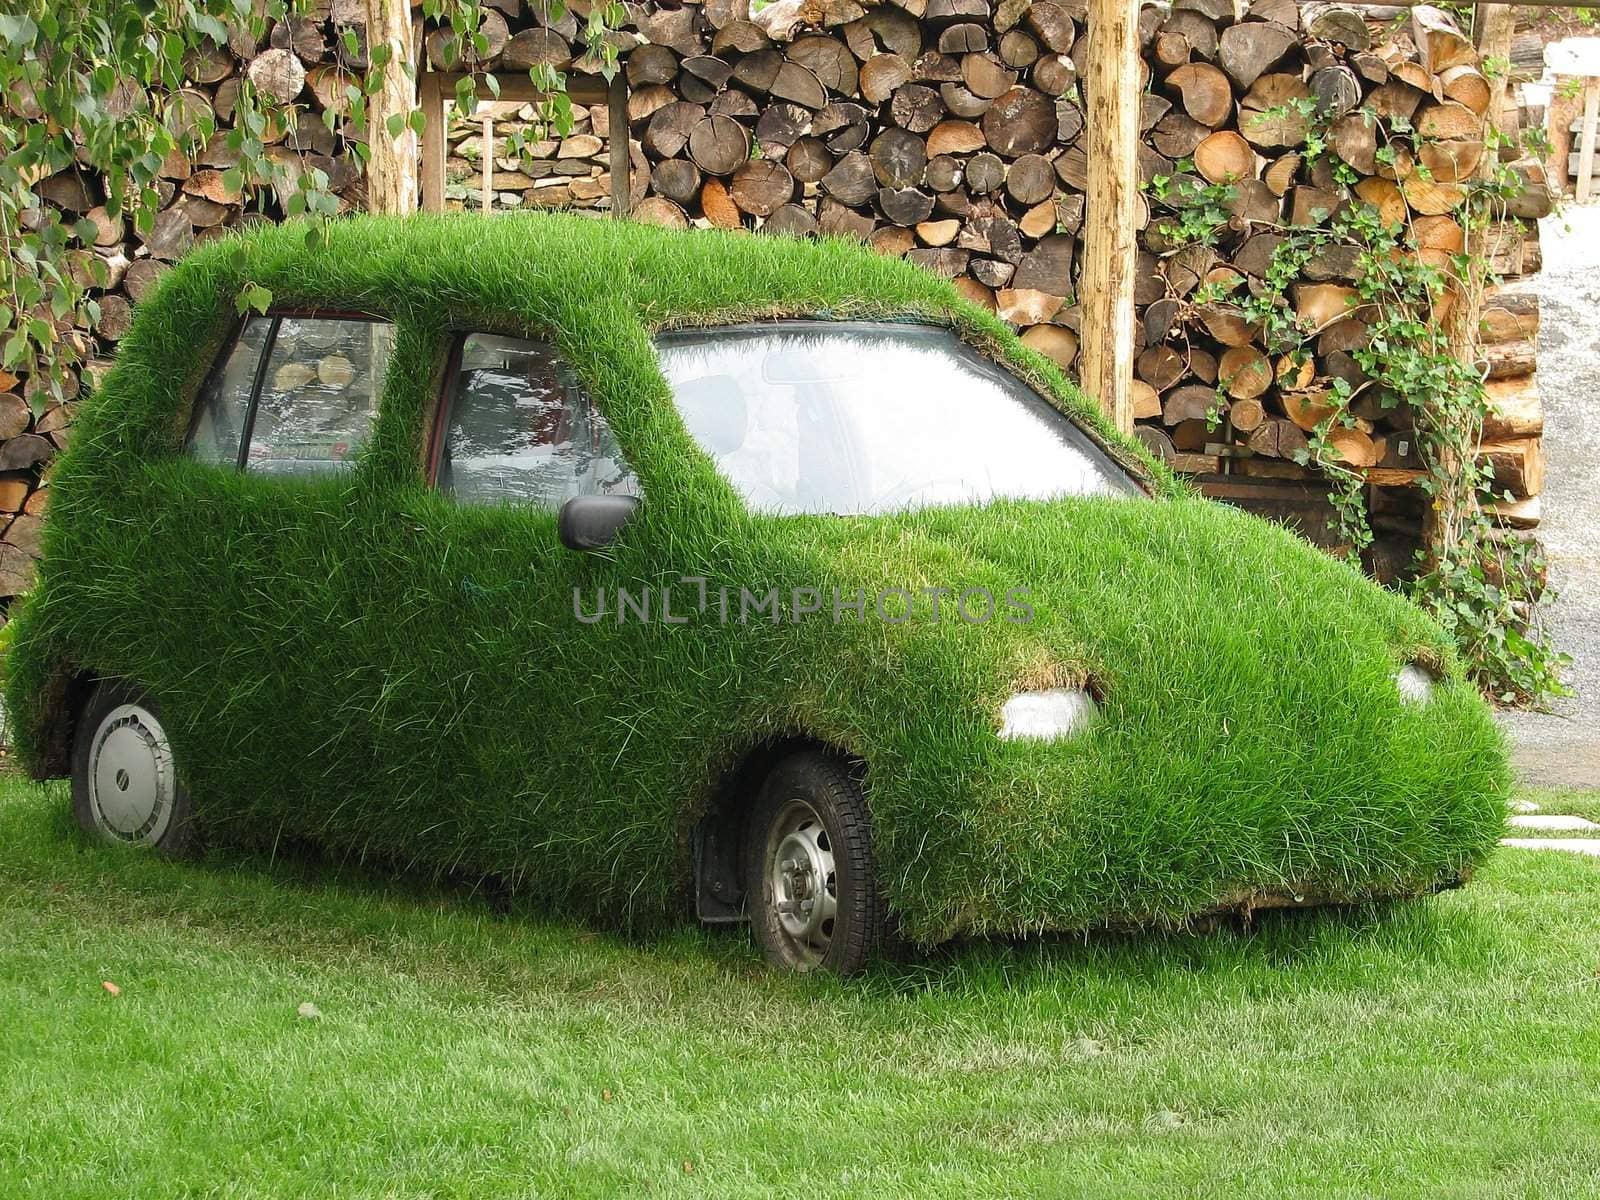 Grass growing on a car